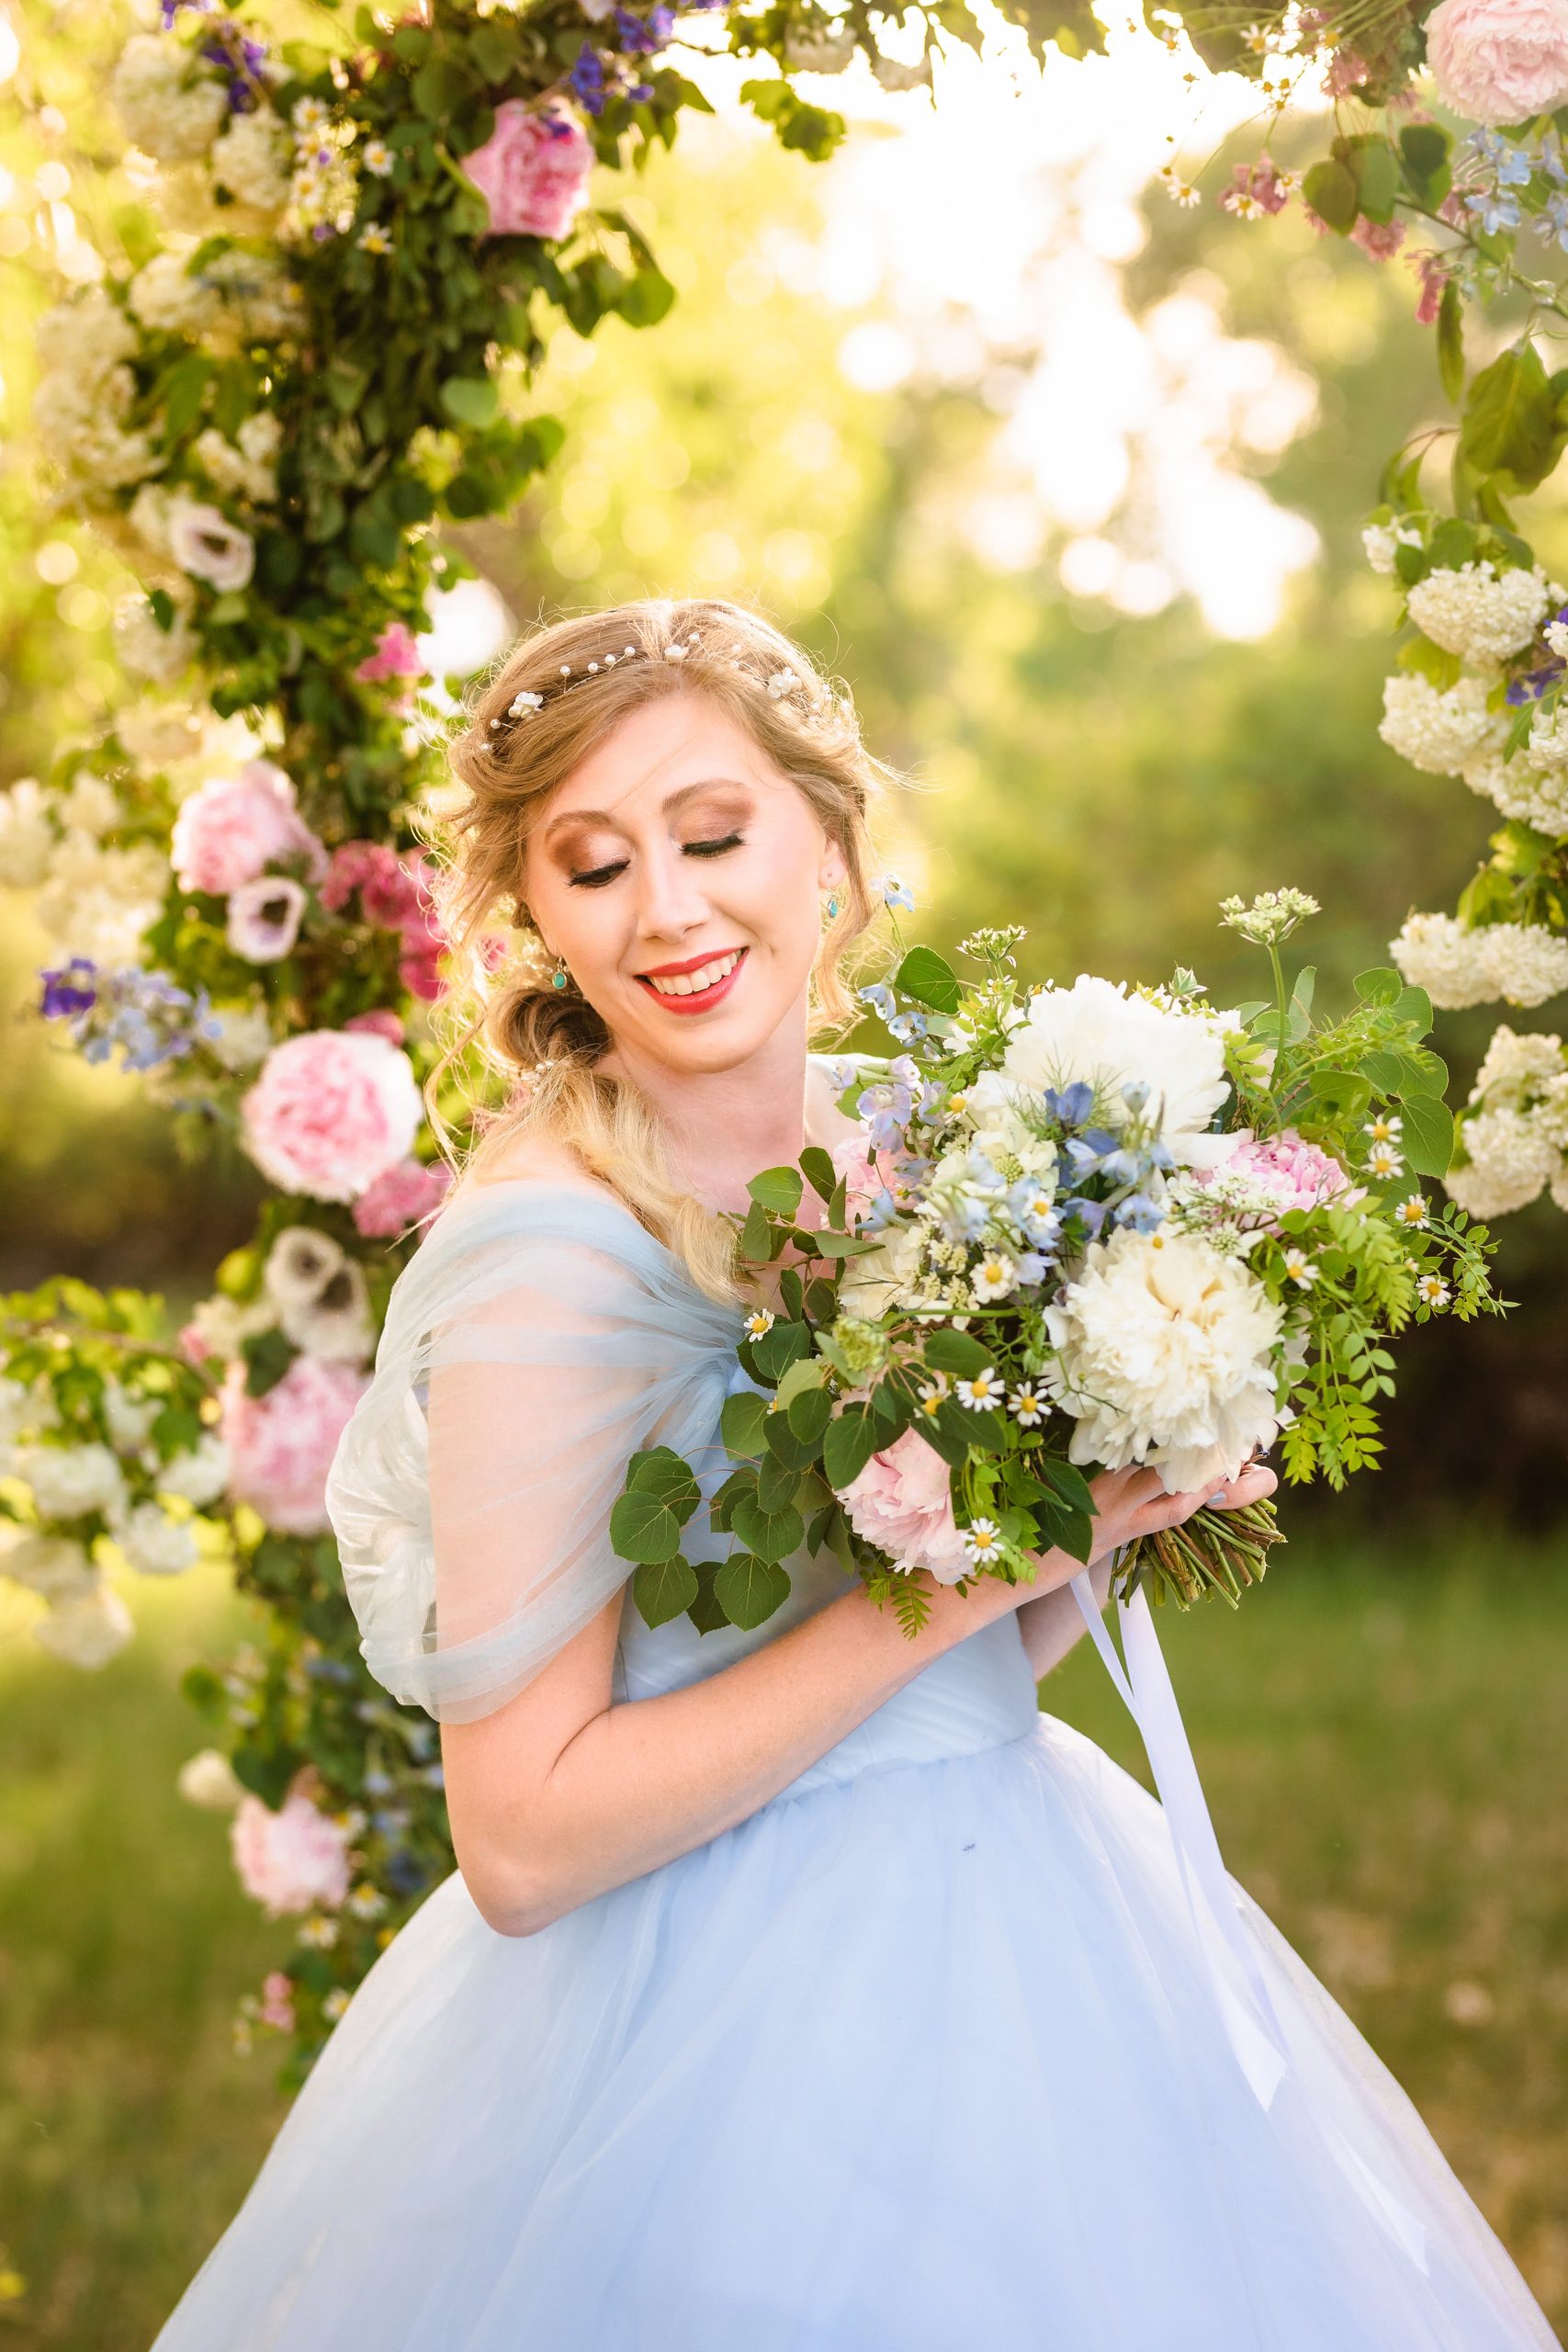 bride gazes at shoulder in blue wedding dress with pink flowers